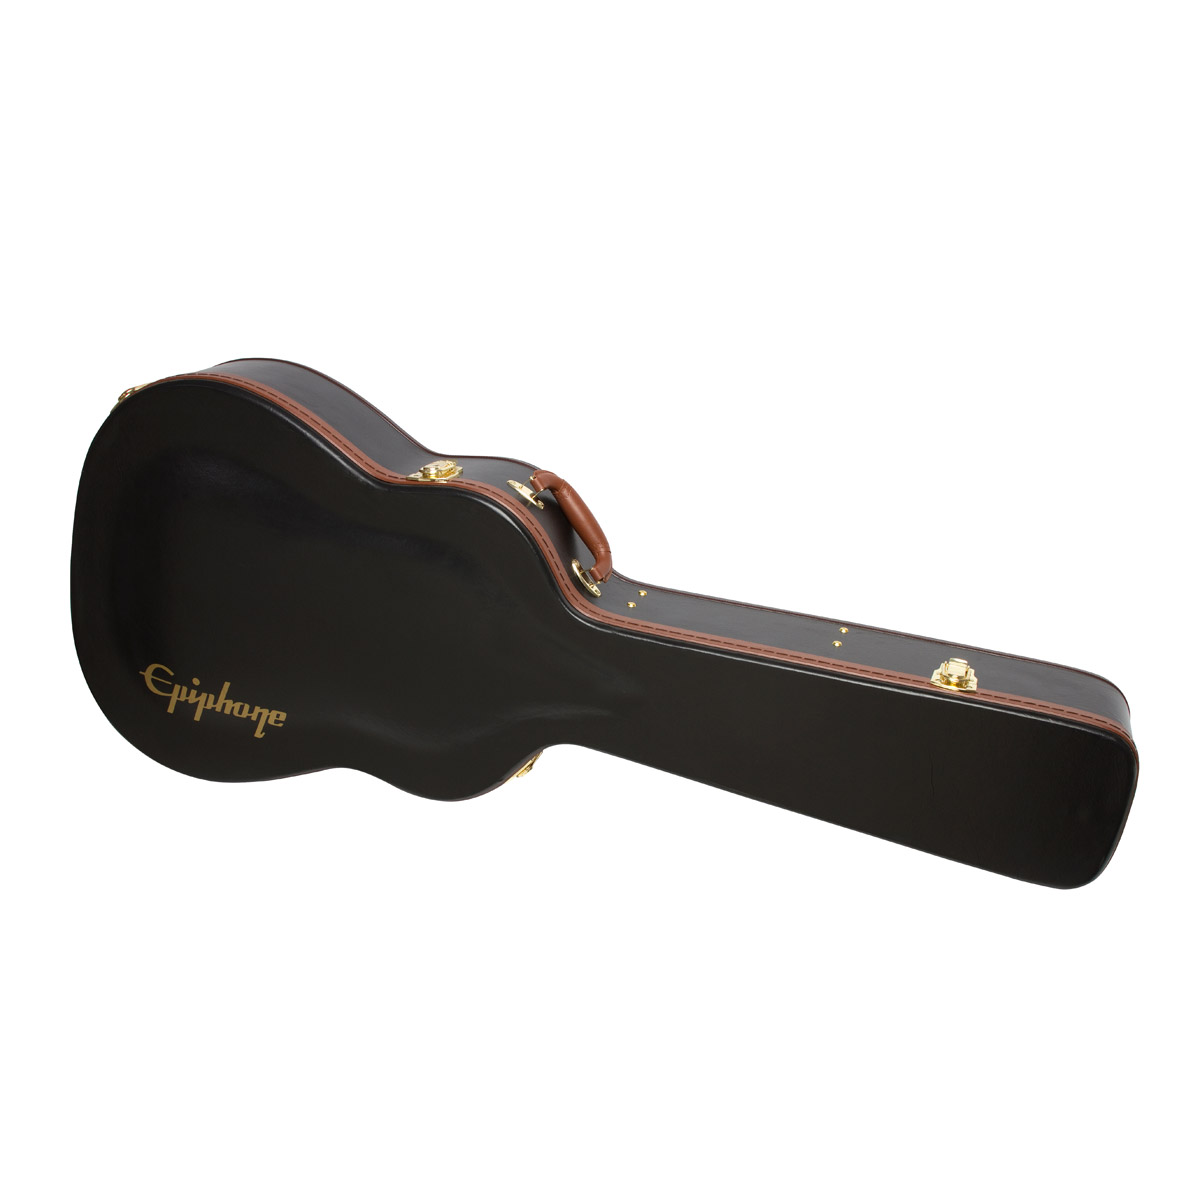 Epiphone / Acoustic AJ Dreadnought Hard Case (940-EDREAD)ハードケース アコースティックギター用